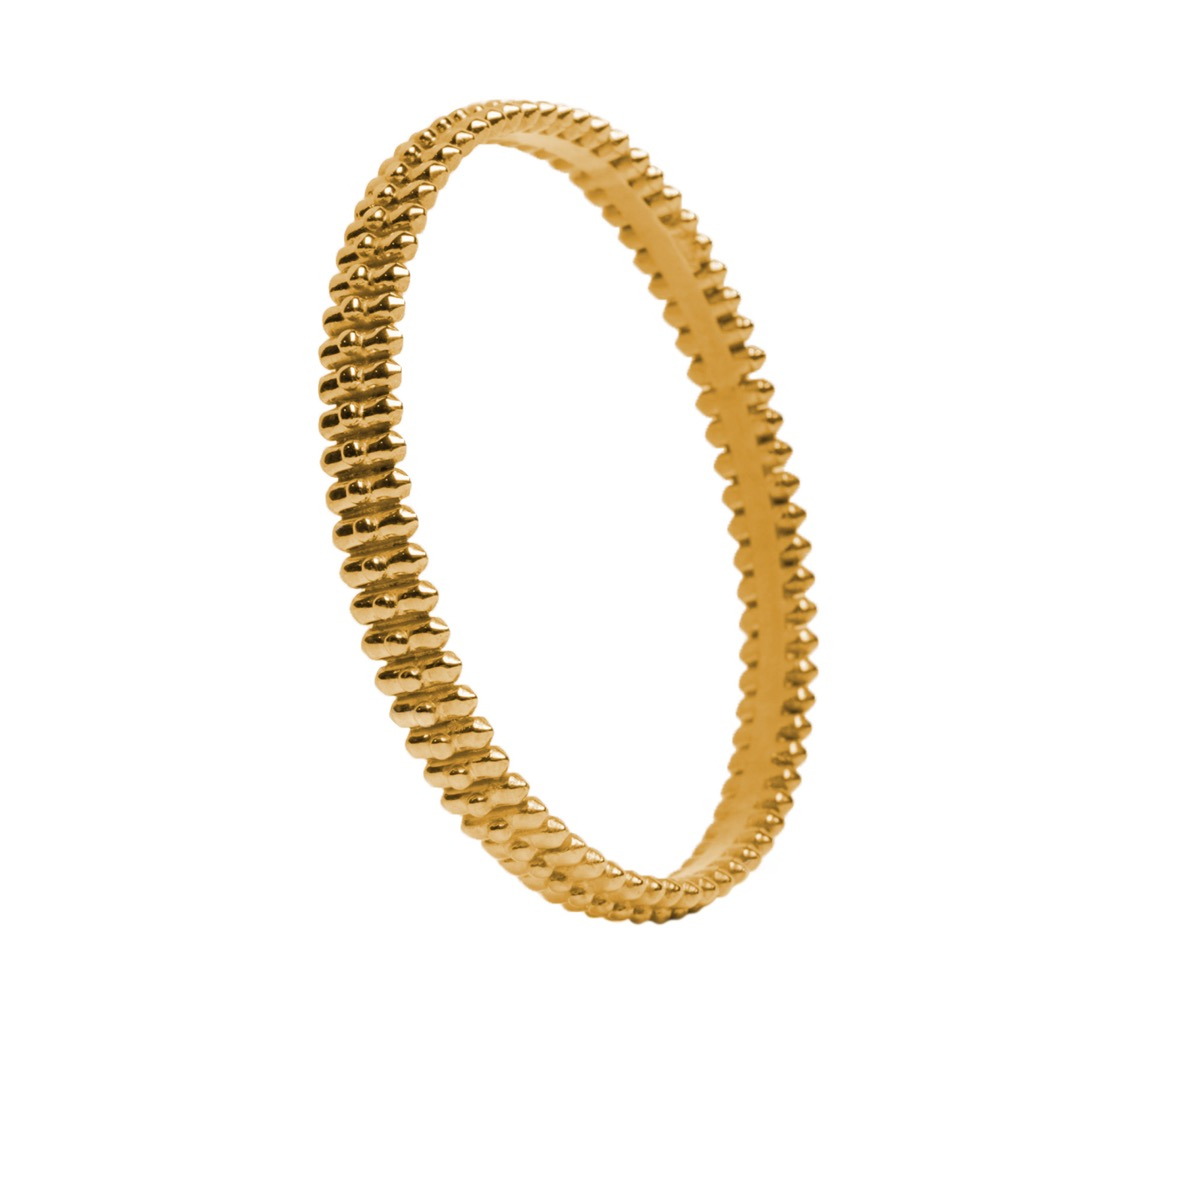 Scalloped Bangle Bracelet in 9K Yellow Gold - 